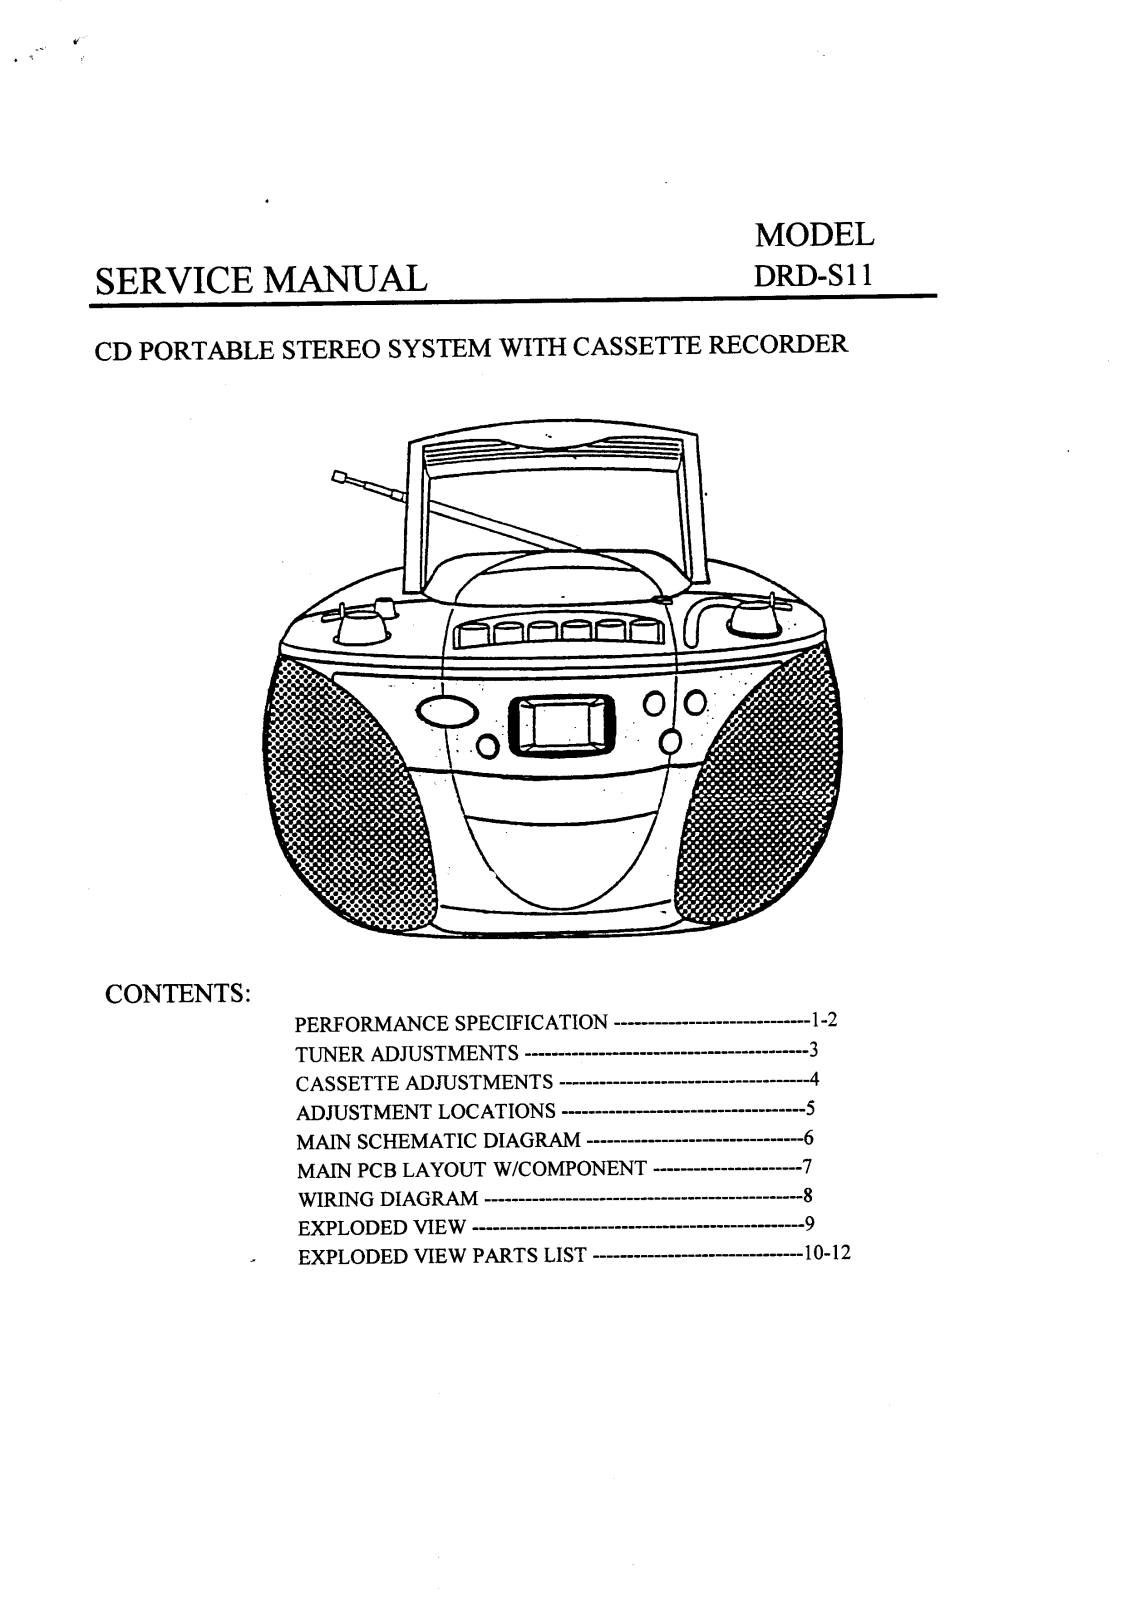 Daewoo DRD-S11 Service Manual